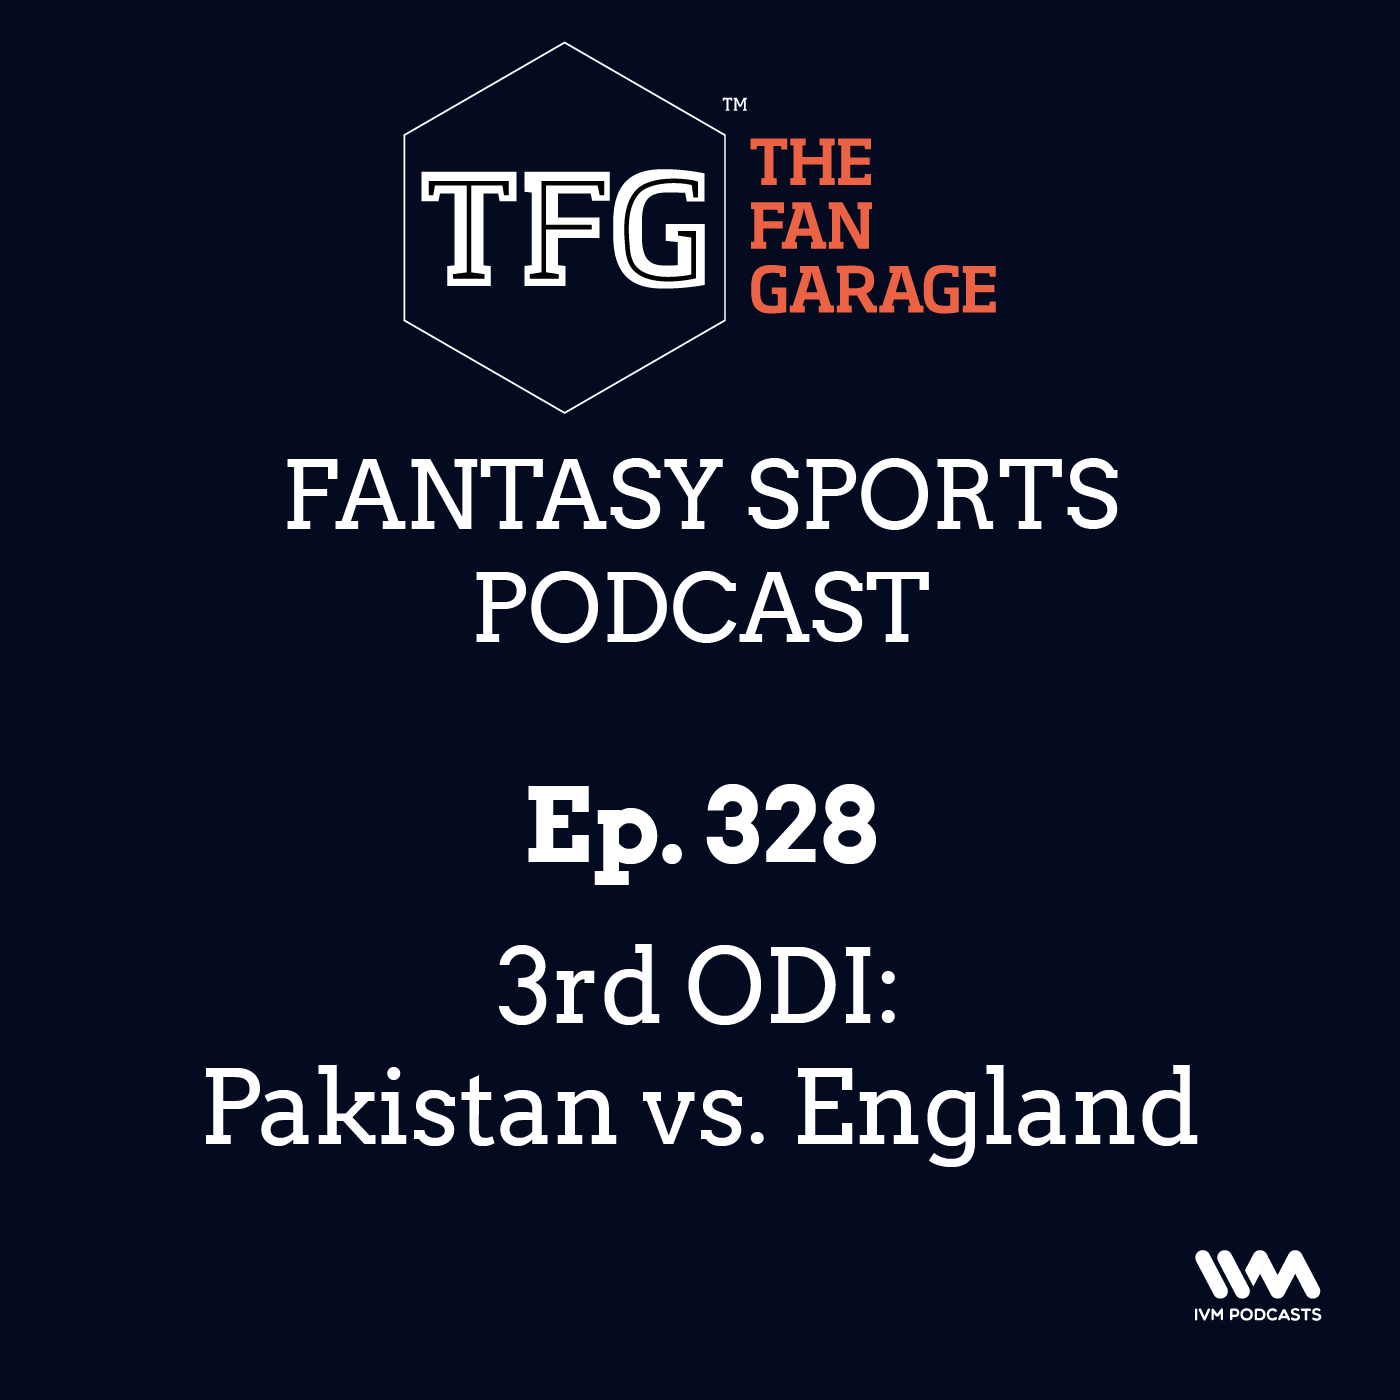 TFG Fantasy Sports Podcast Ep. 328: 3rd ODI: Pakistan vs. England